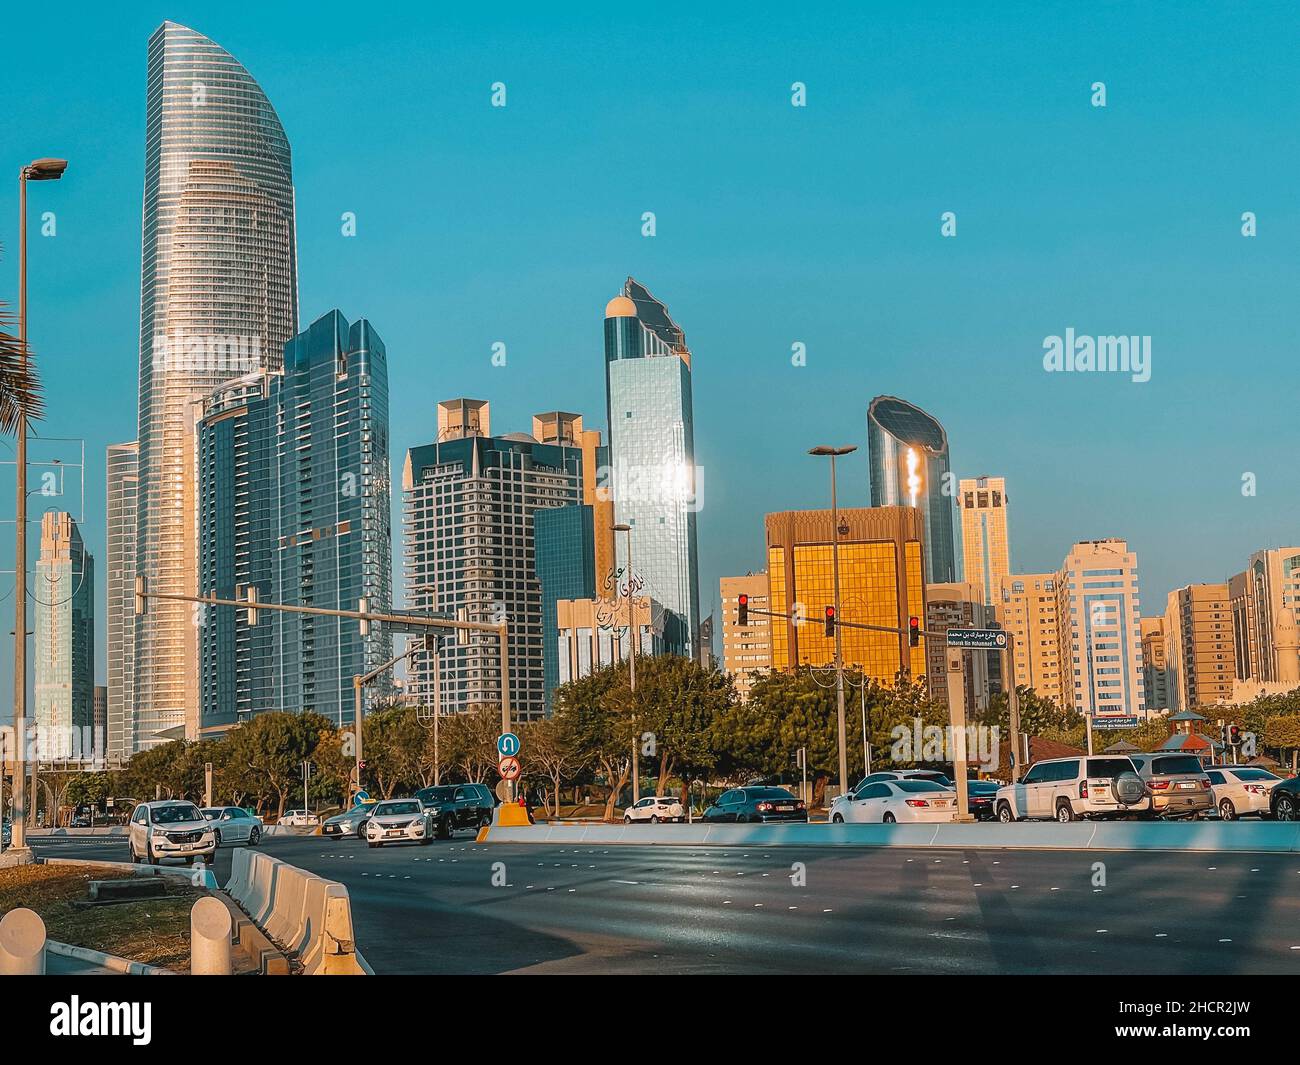 Downtown Abu Dhabi city (UAE) - Abu Dhabi corniche road and beach, landmark towers Stock Photo